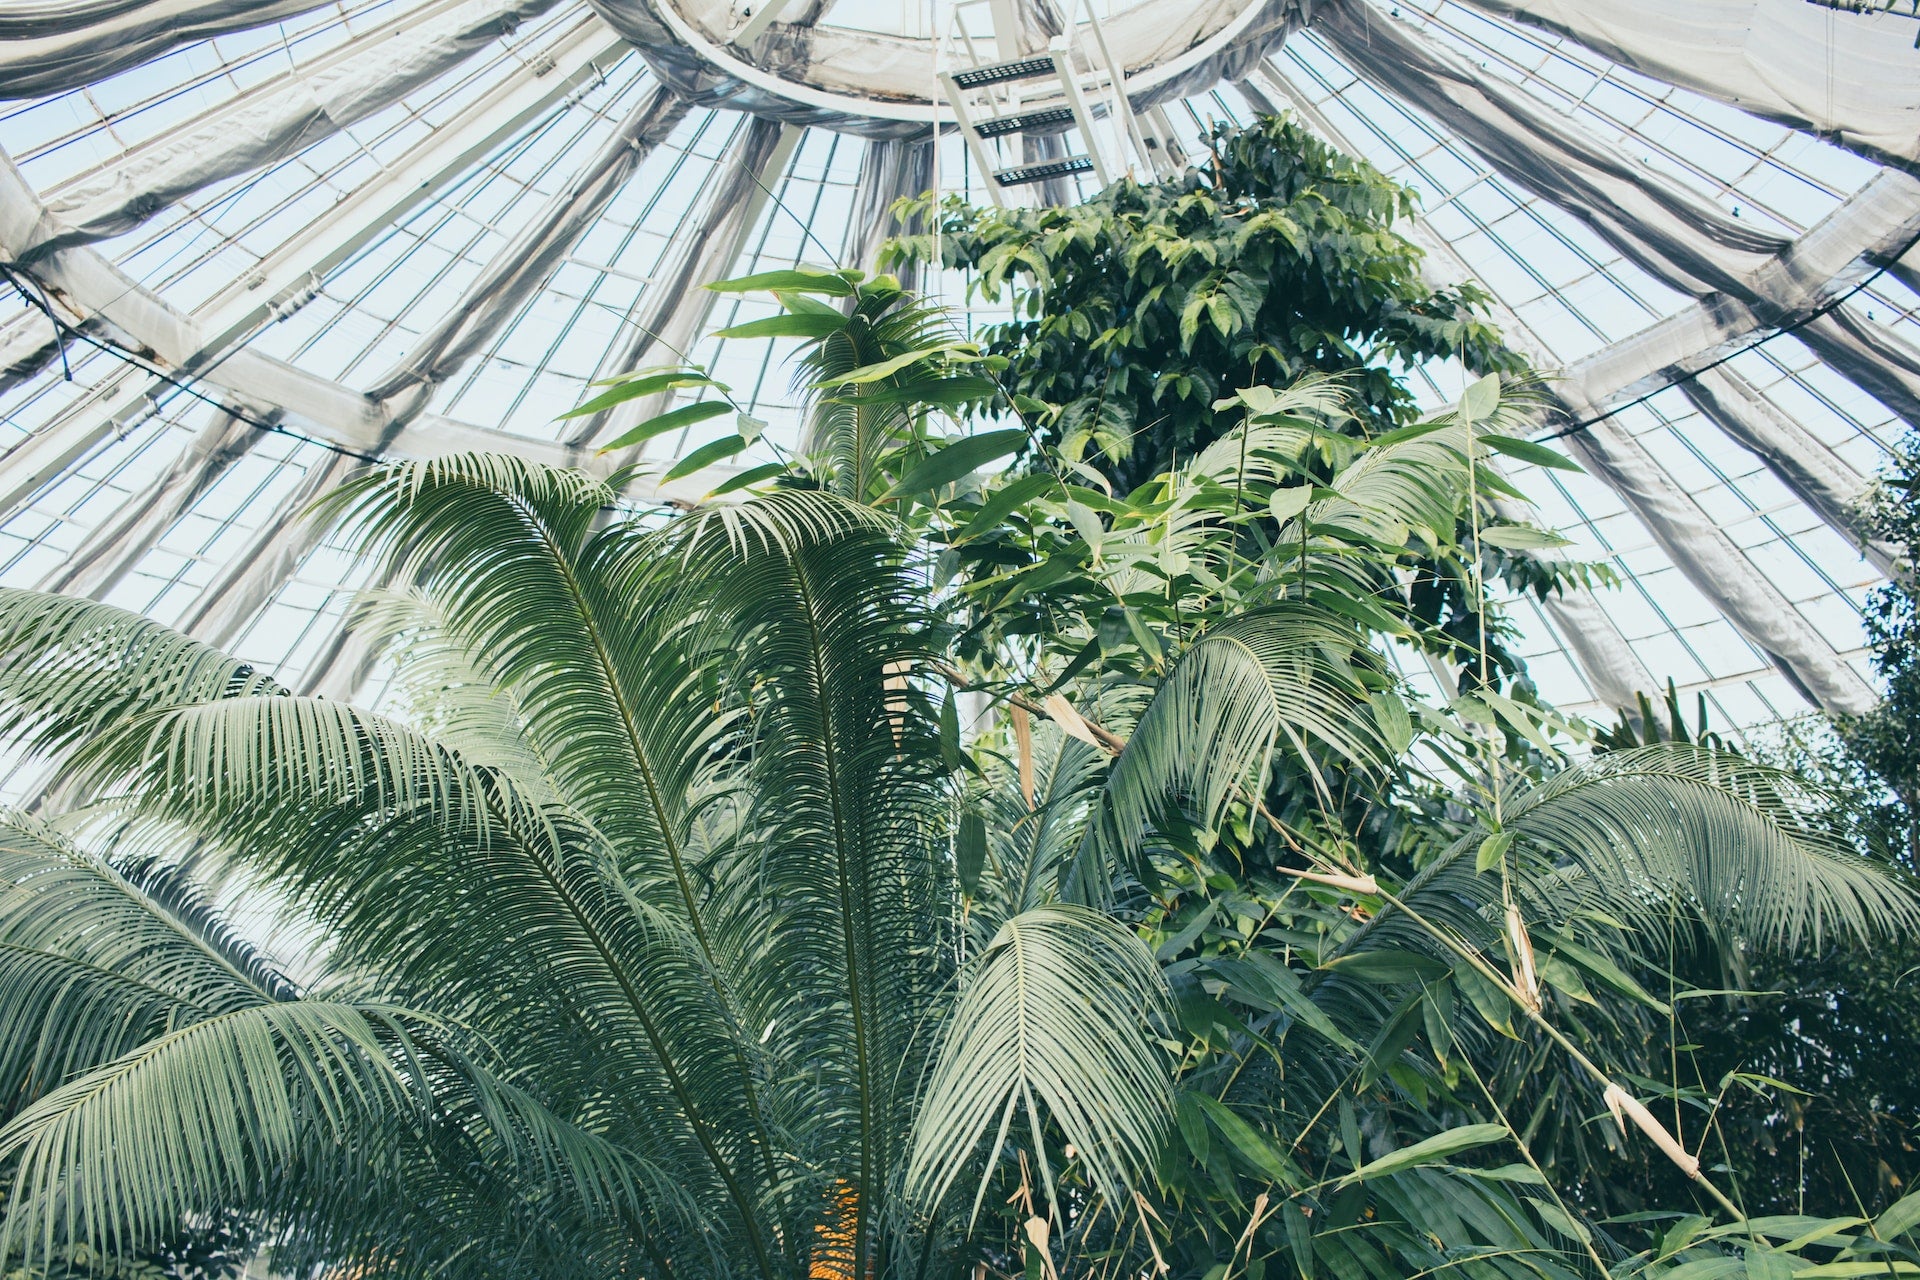 View from inside the Palm House at Copenhagen's Botanical Garden